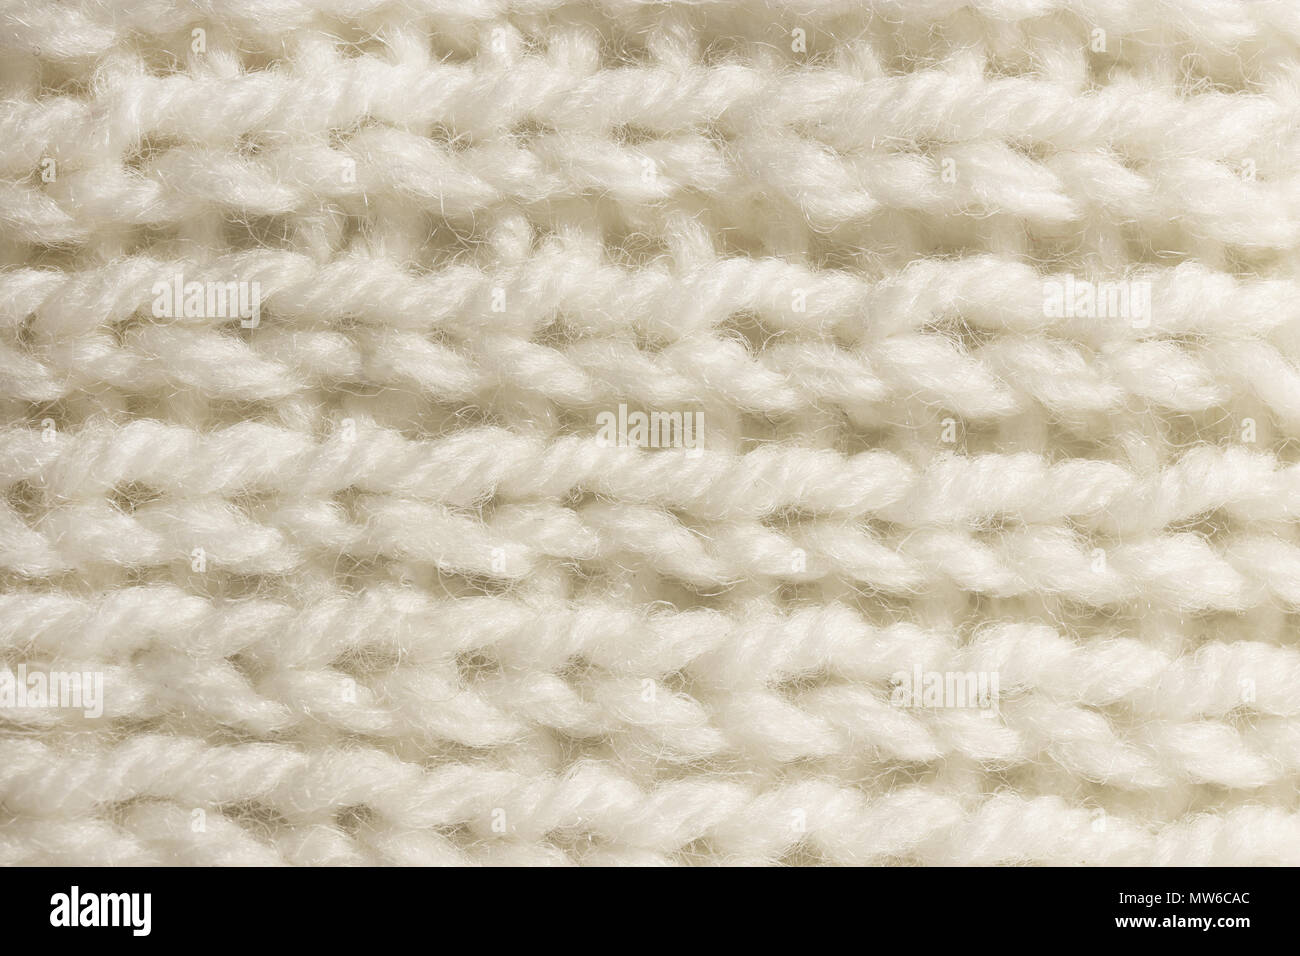 Warm White Wool Knitting Texture Horizontal Along Weaving Crochet Detailed Rows Sweater Textile Background Macro Closeup Stock Photo Alamy,Rag Quilt Patterns Animal Shapes